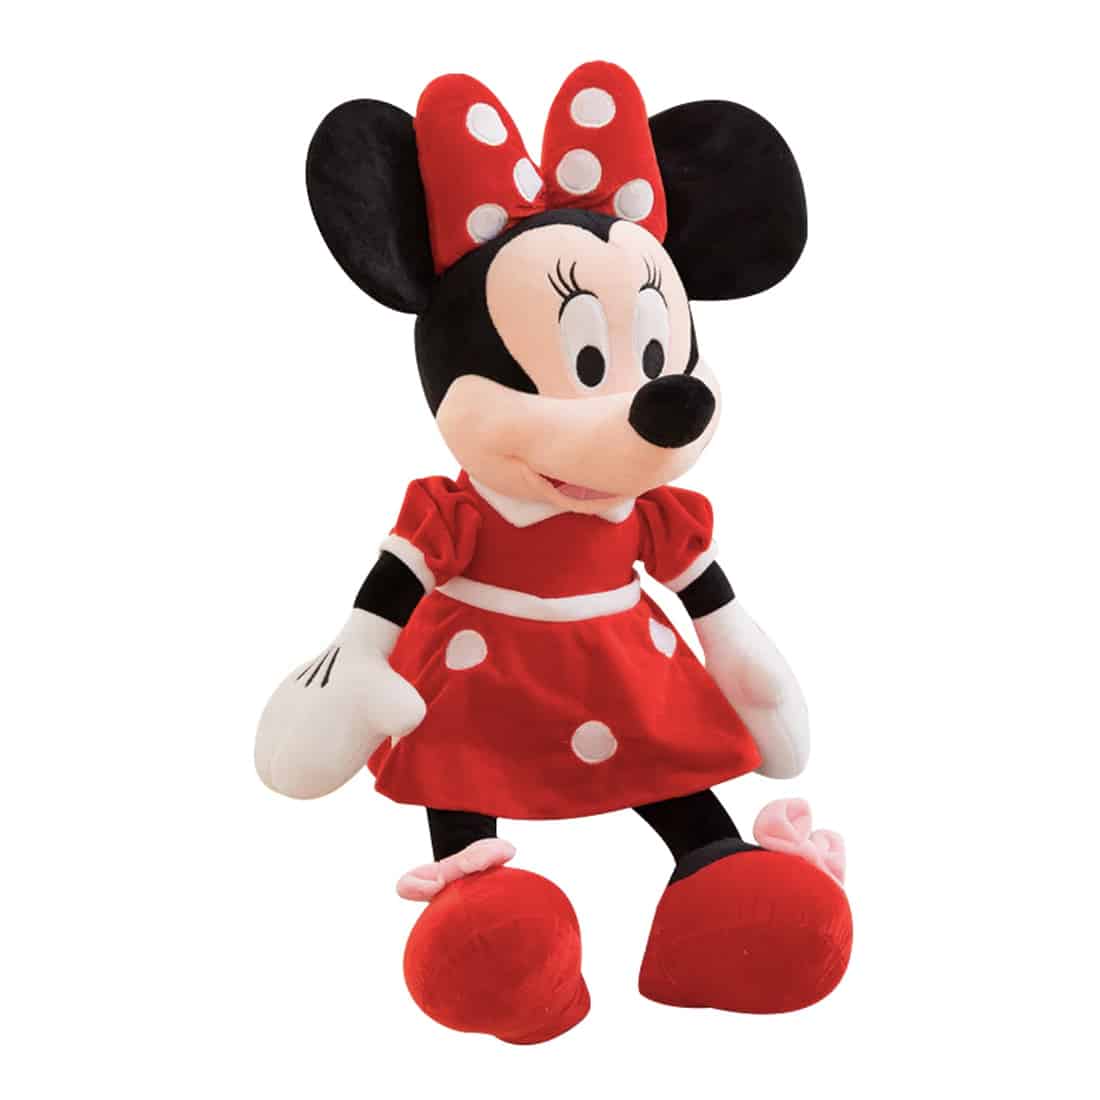 Peluche Minnie Mouse Peluche Disney 87aa0330980ddad2f9e66f: 100cm|30cm|40cm|50cm|70cm